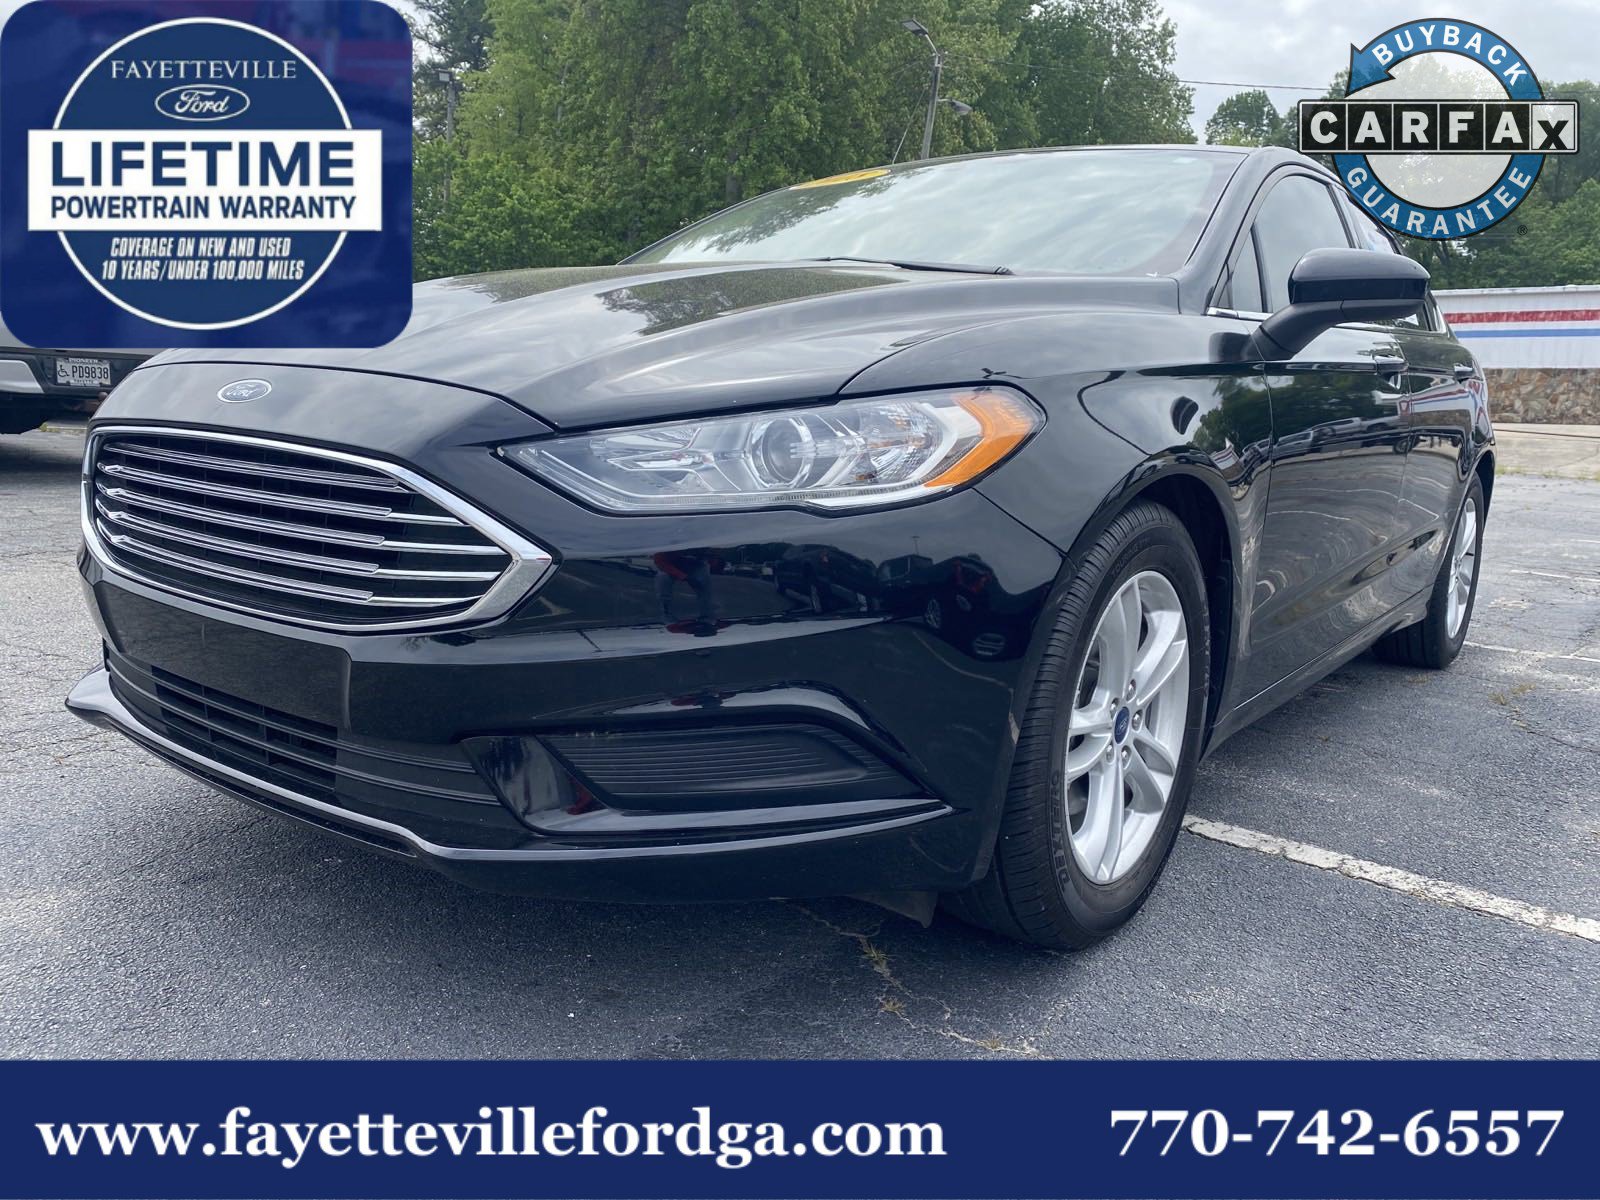 2018 Ford Fusion Fayetteville GA